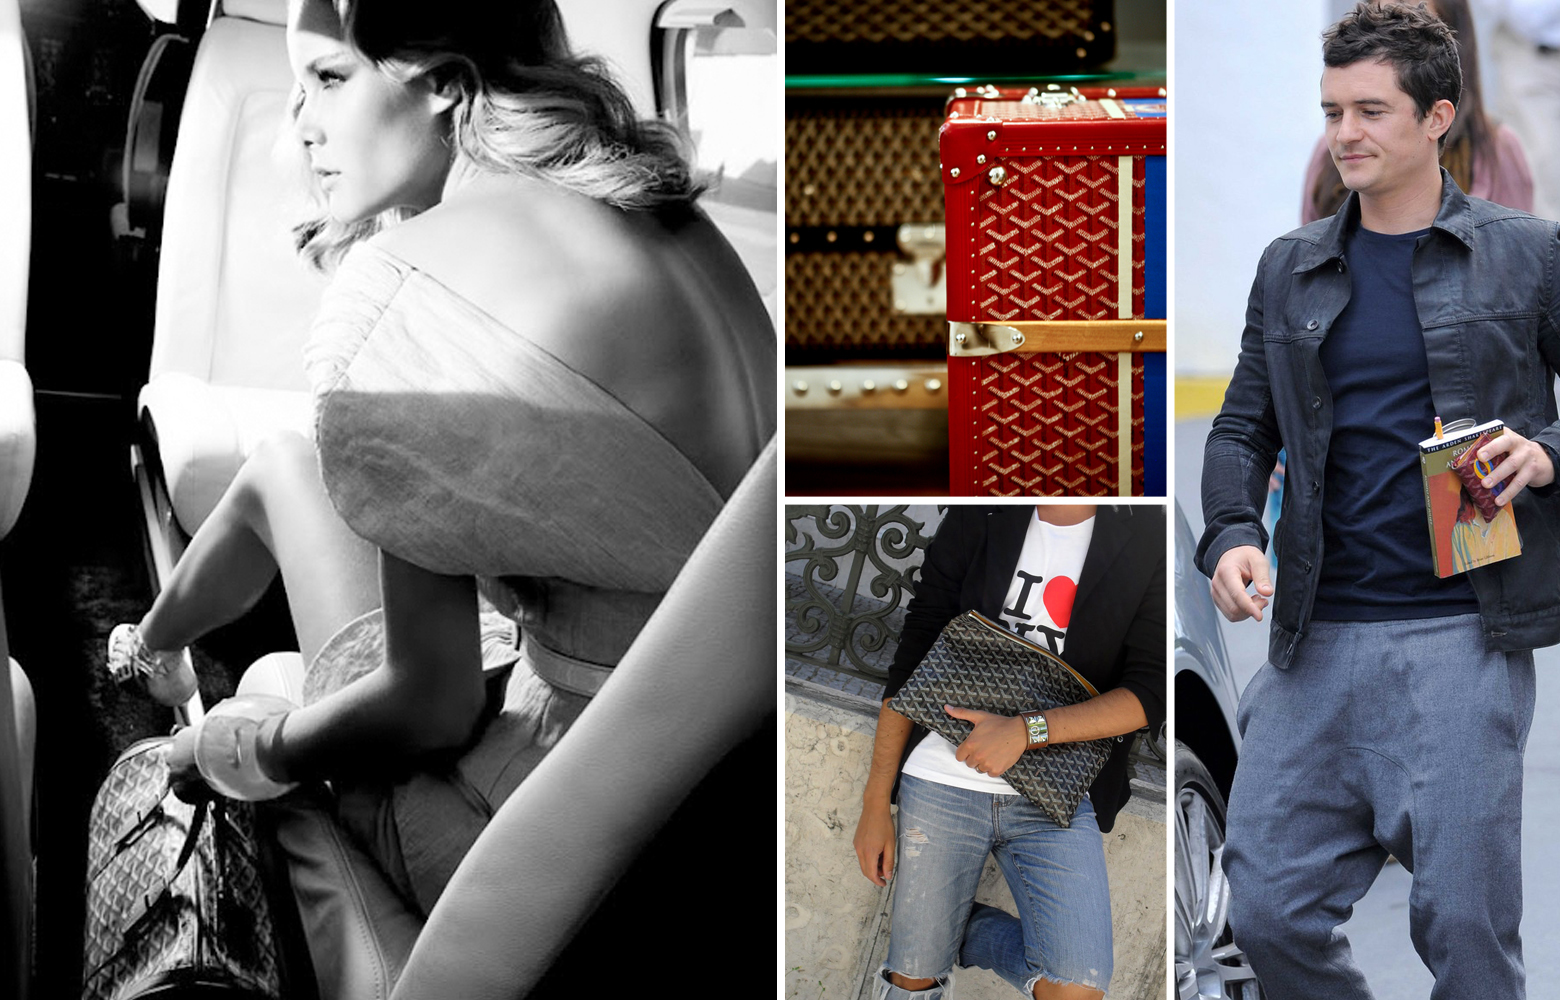 Louis Vuitton: 100 Legendary Trunks  Denzil Jacobs Photography & Luxury  Blog